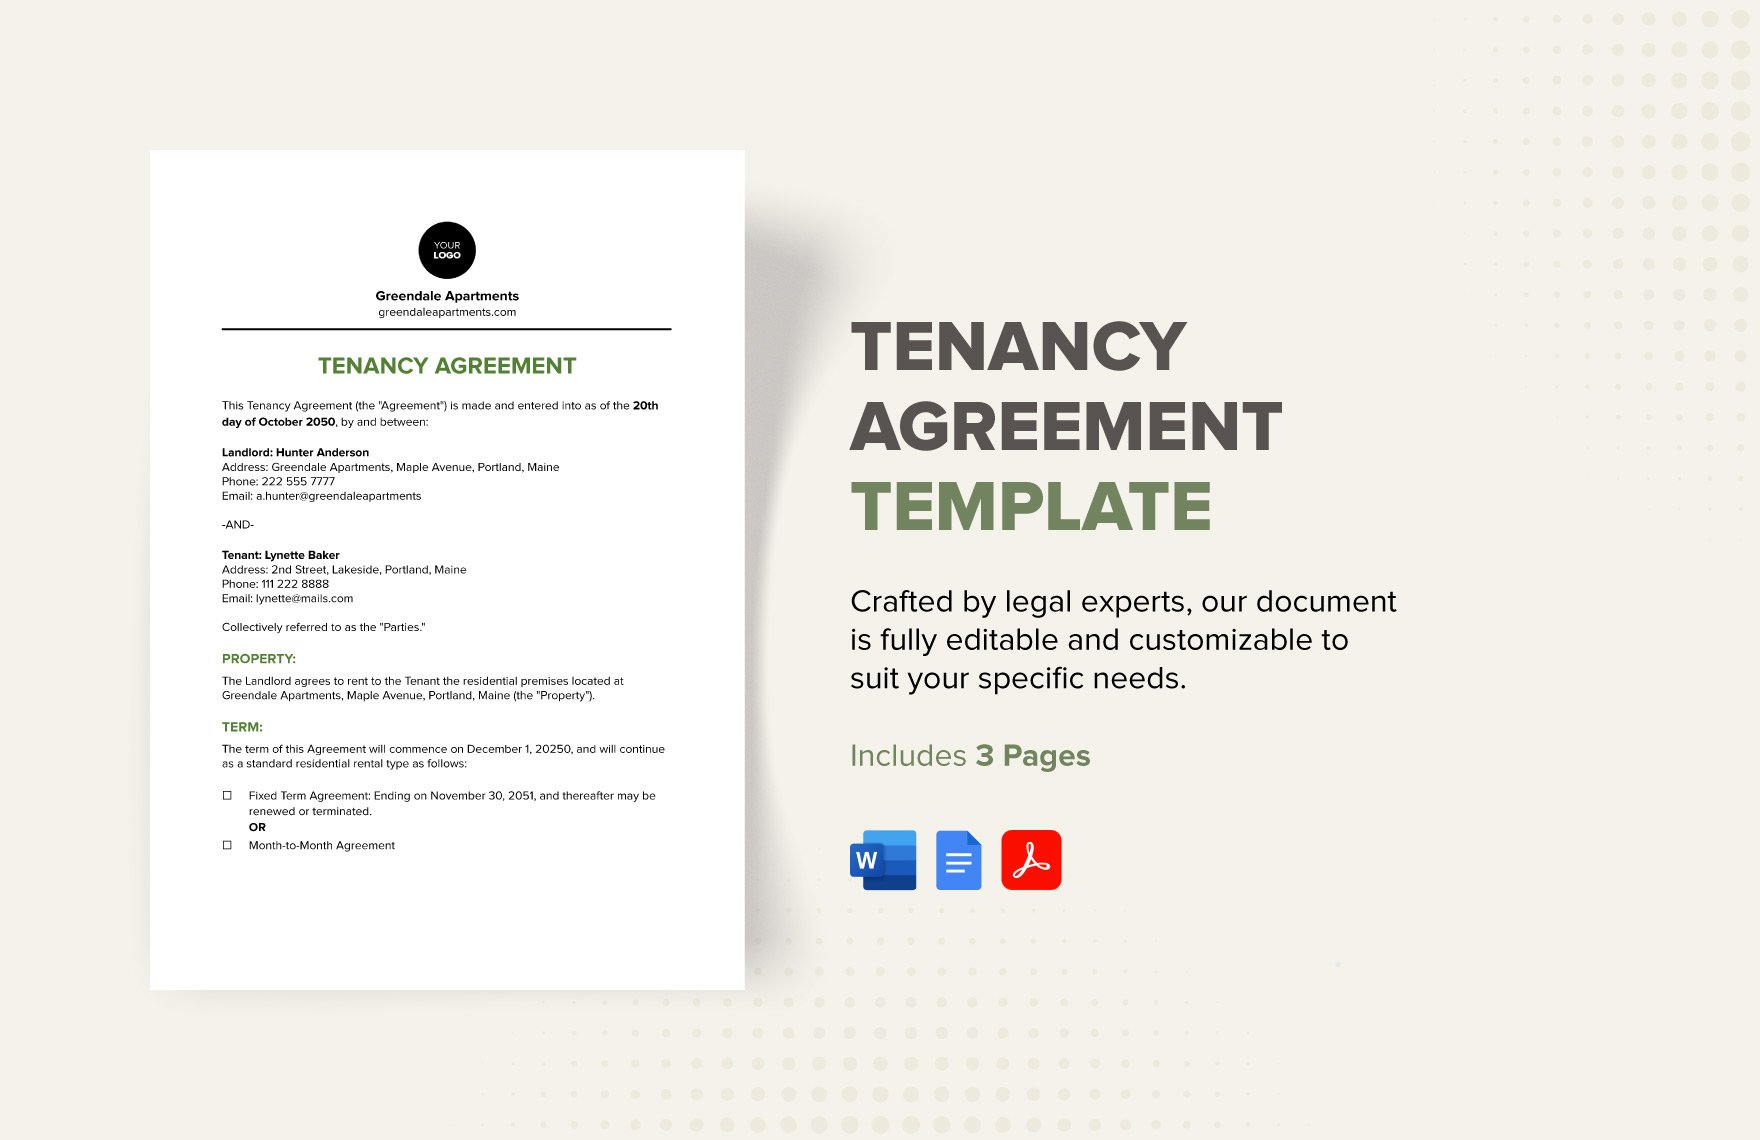 Tenancy Agreement Template in Word, Google Docs, PDF